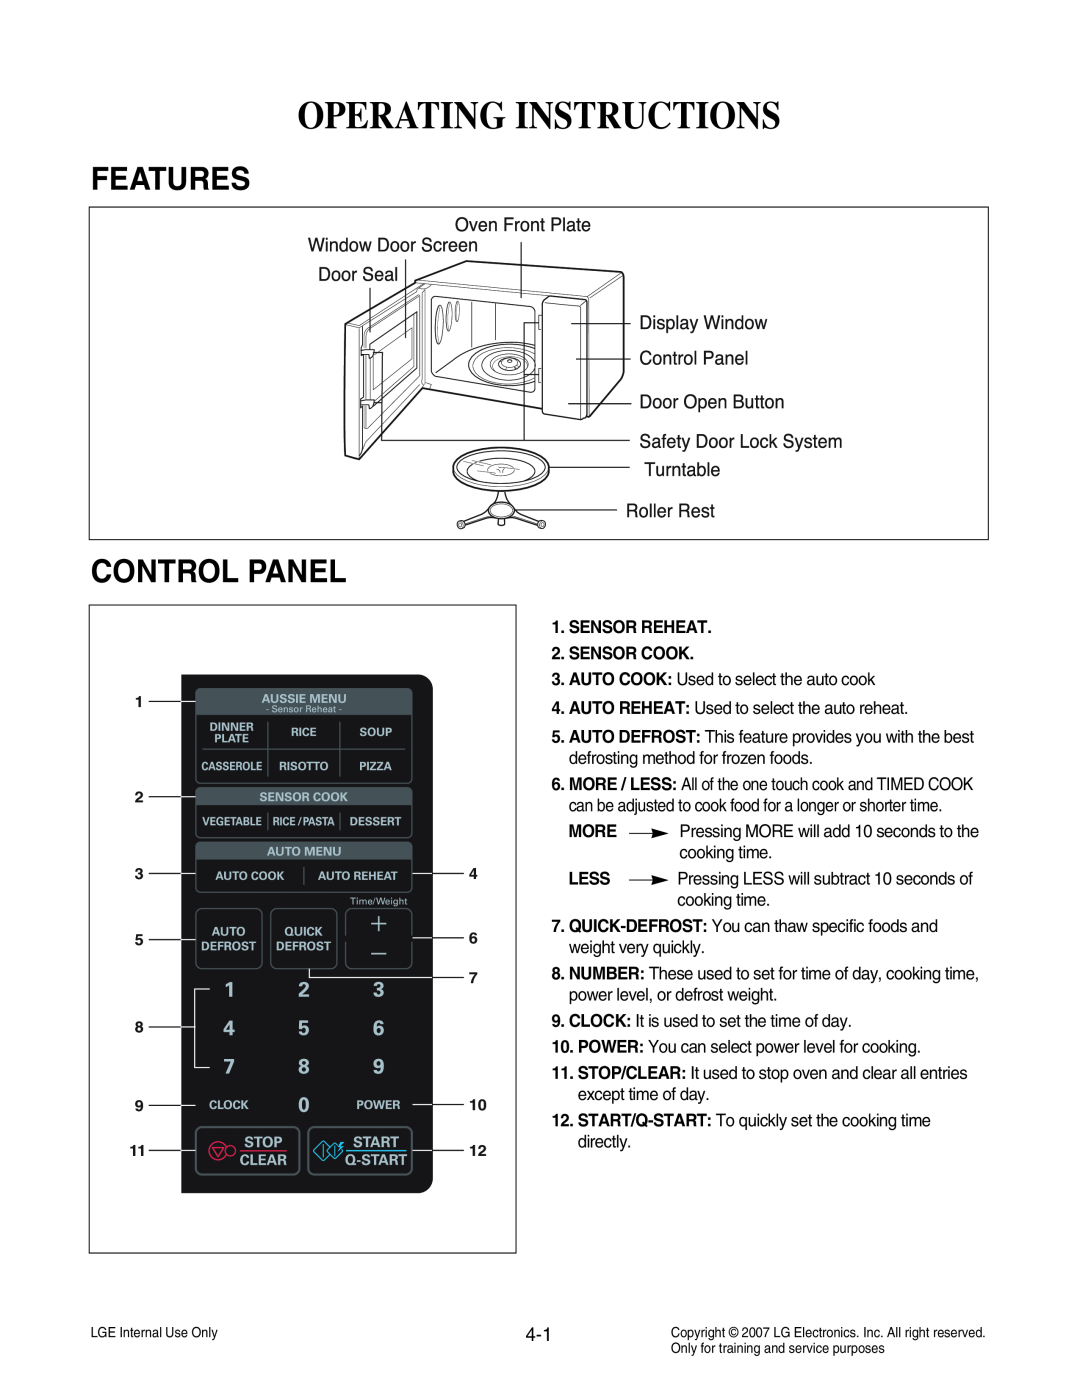 LG Electronics MS3447GRS Operating Instructions, Features, Control Panel, SENSOR REHEAT 2. SENSOR COOK, Less 